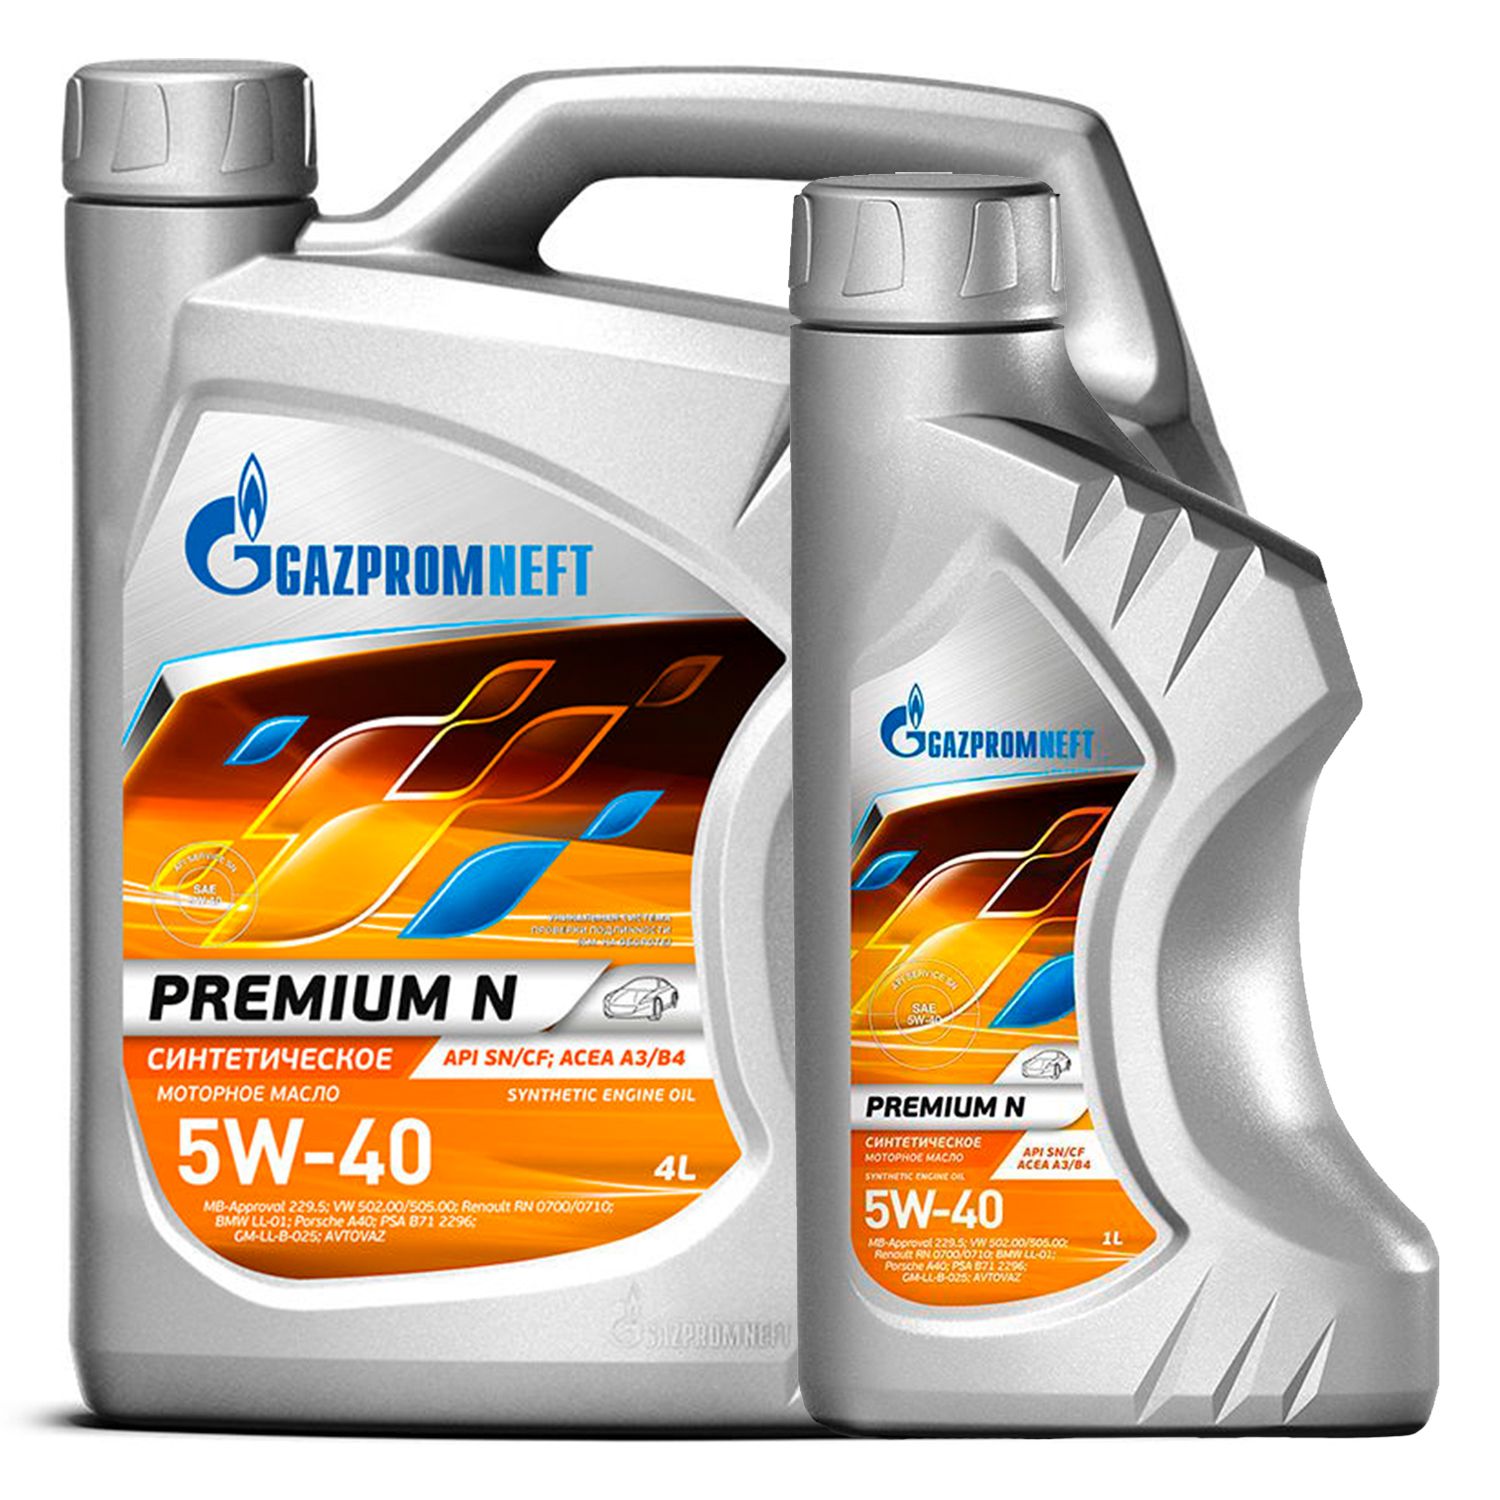 Купить Gazpromneft Premium N 5W-40, 4+1л. АКЦИЯ Моторное масло .